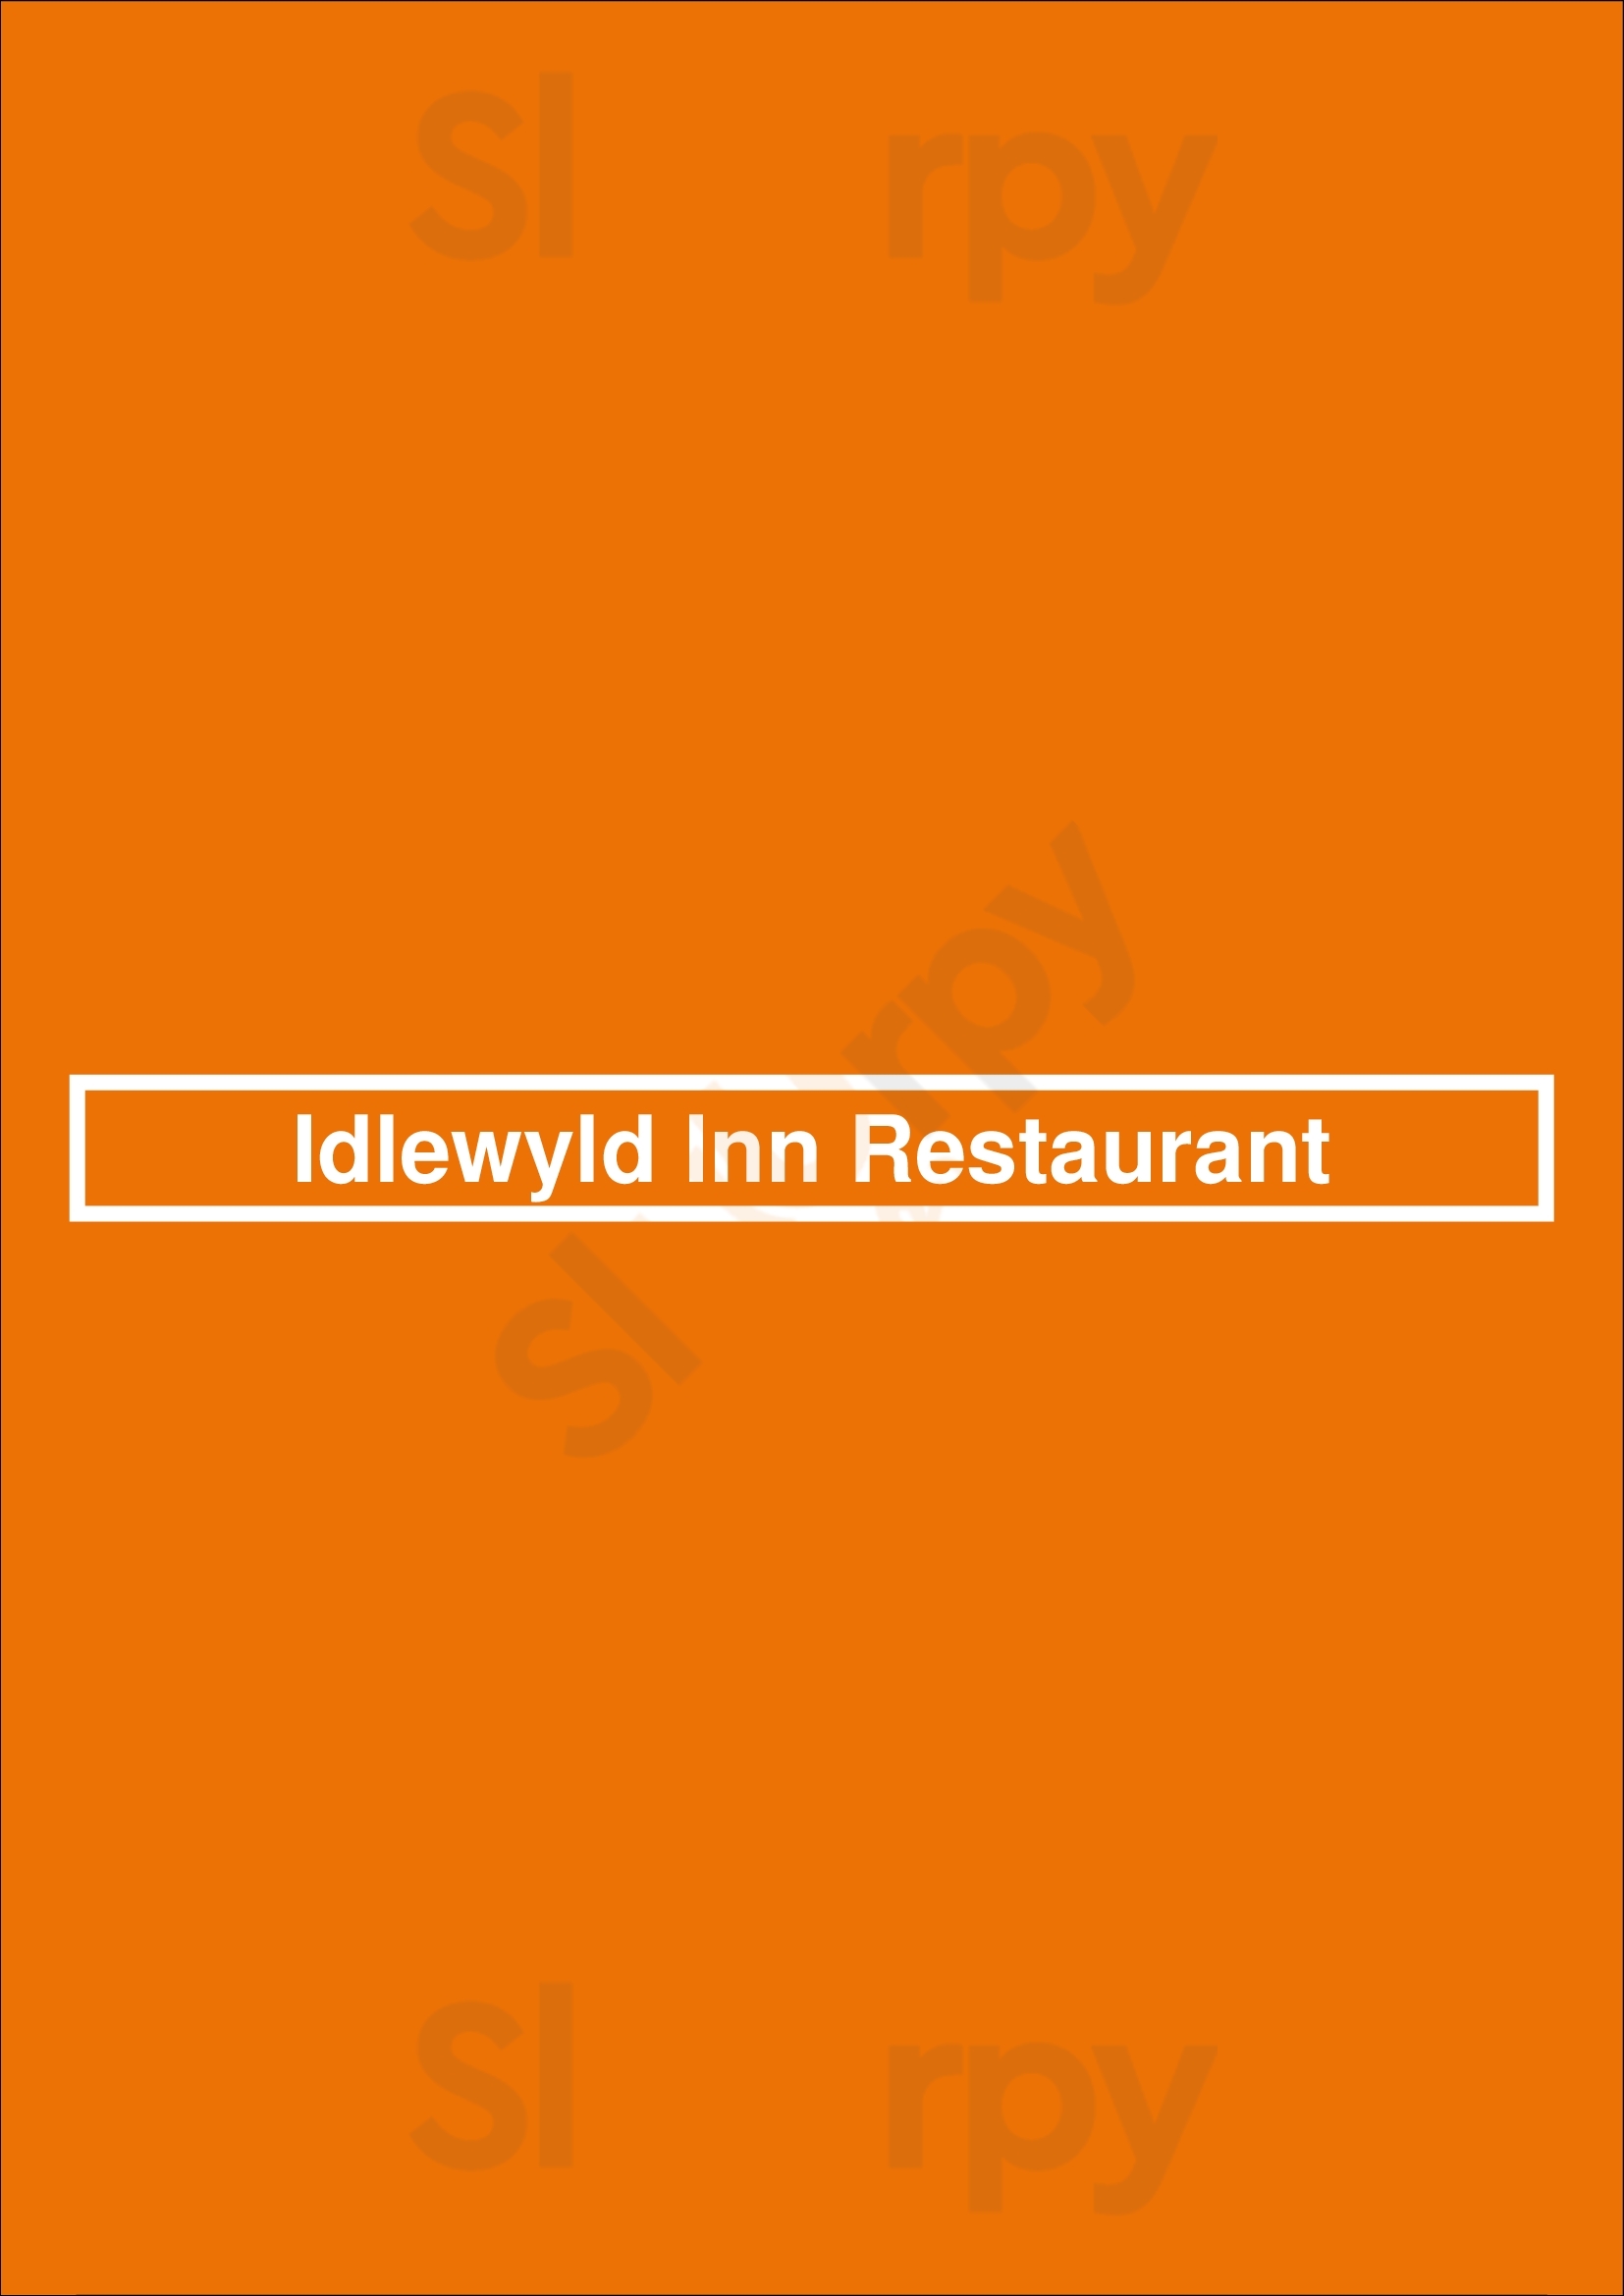 Idlewyld Inn Restaurant London Menu - 1